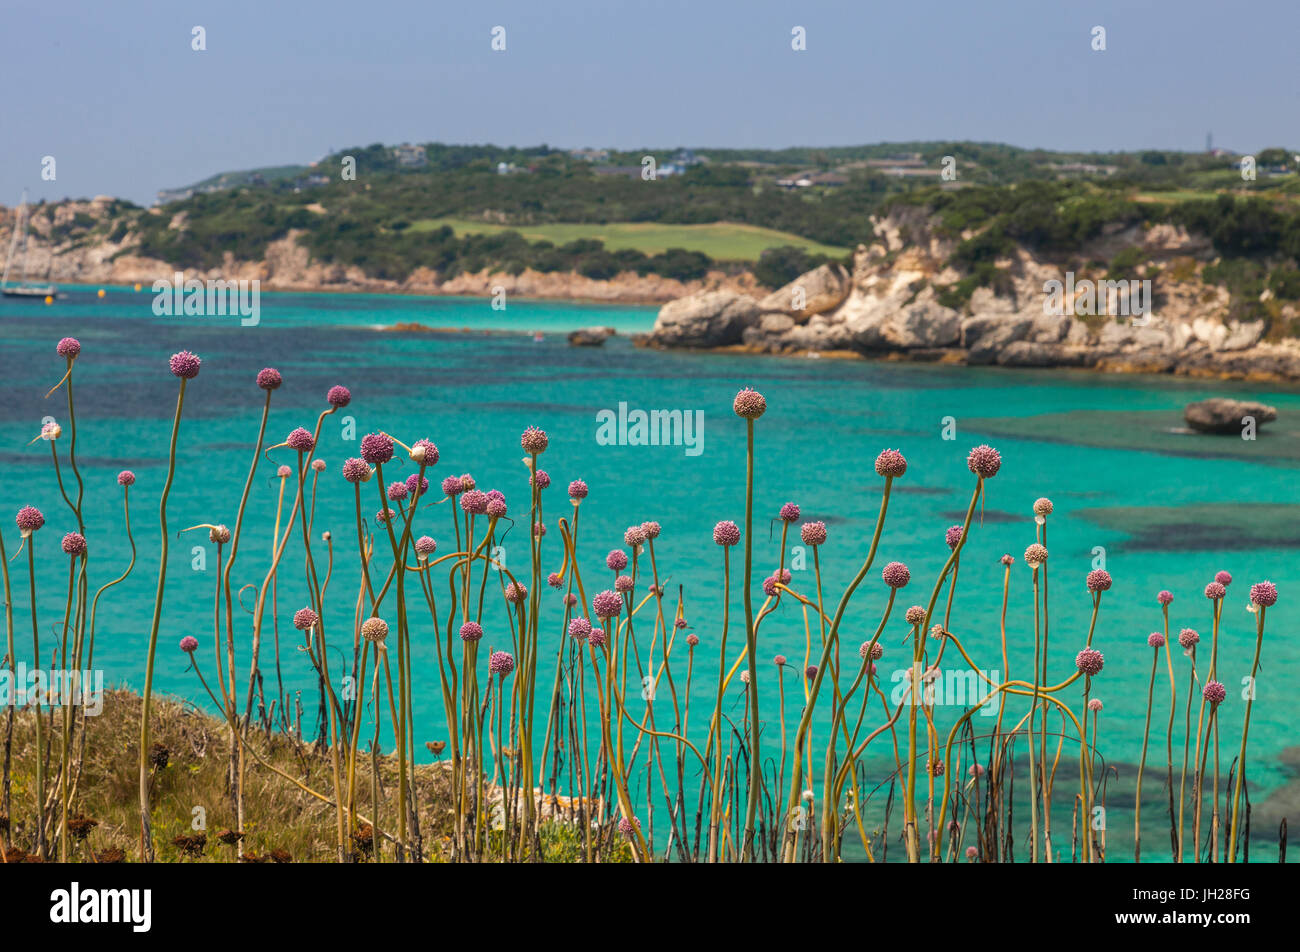 Rosa Blumen des Landesinneren Rahmens das türkisfarbene Meer im Sommer, Sperone, Bonifacio, Süd-Korsika, Frankreich, Mittelmeer, Europa Stockfoto